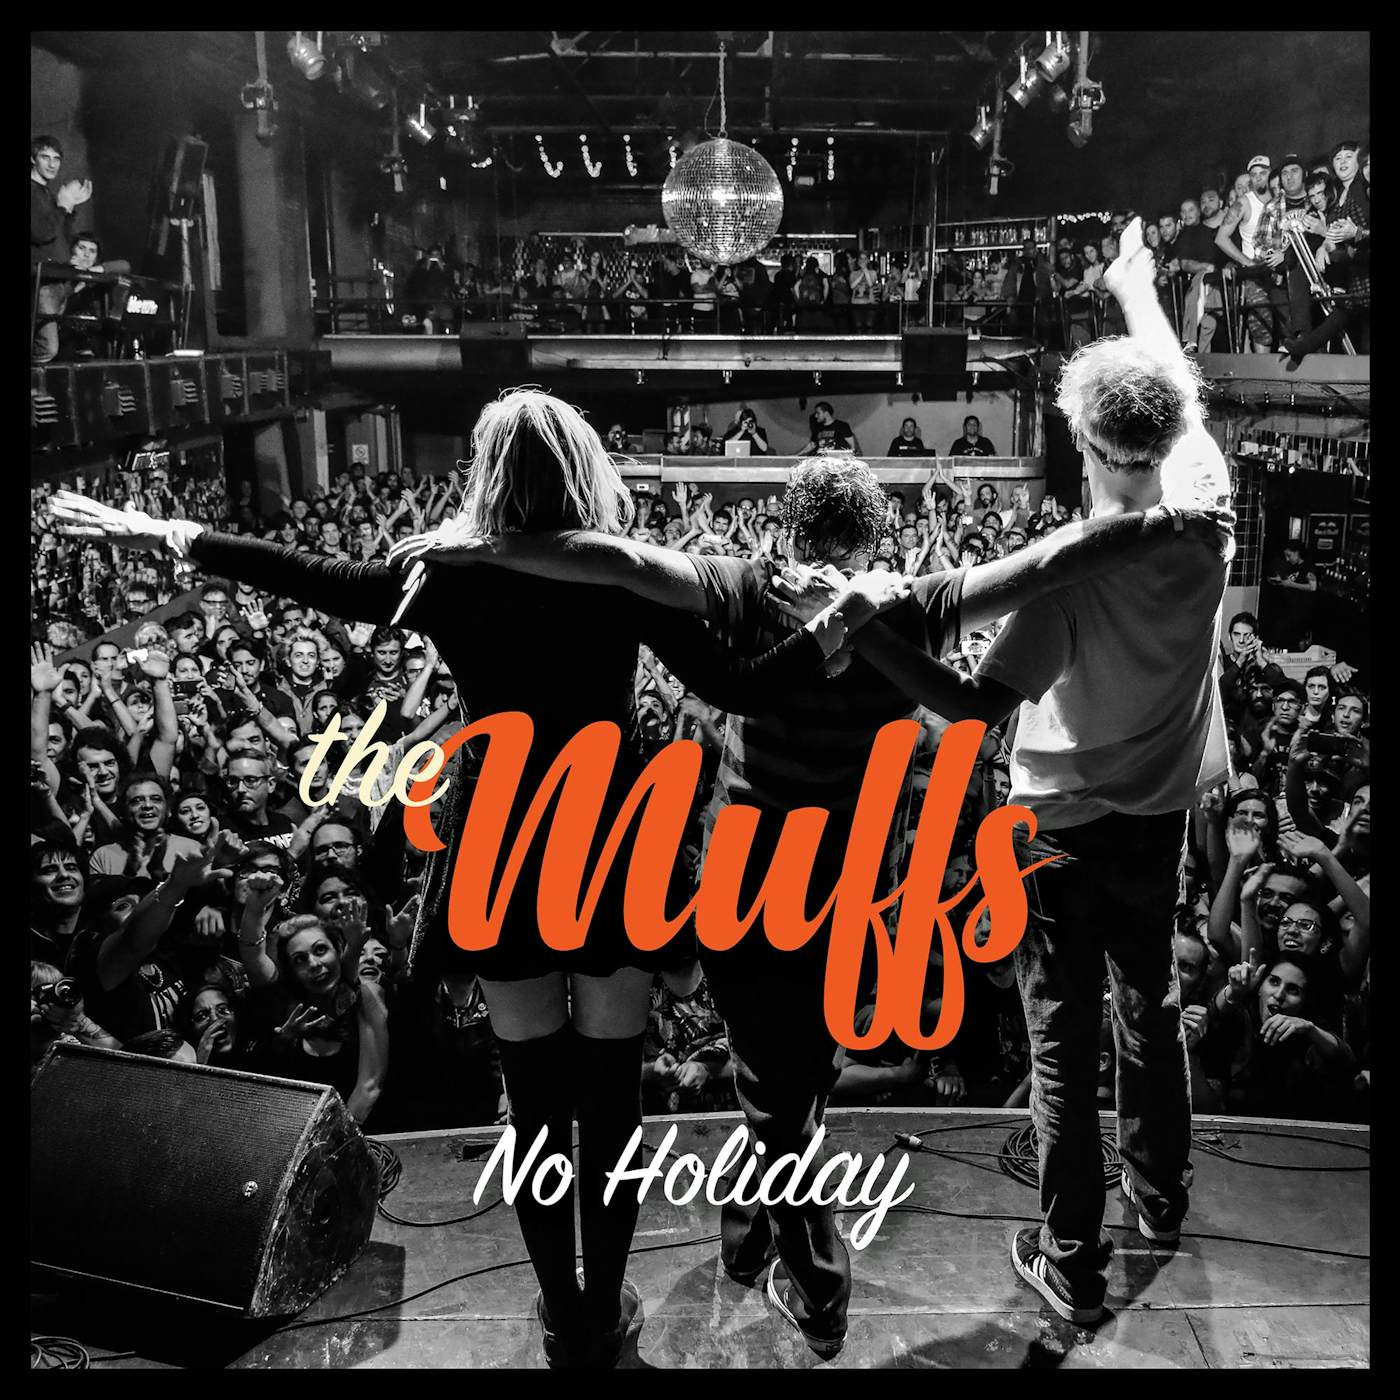 The Muffs NO HOLIDAY CD